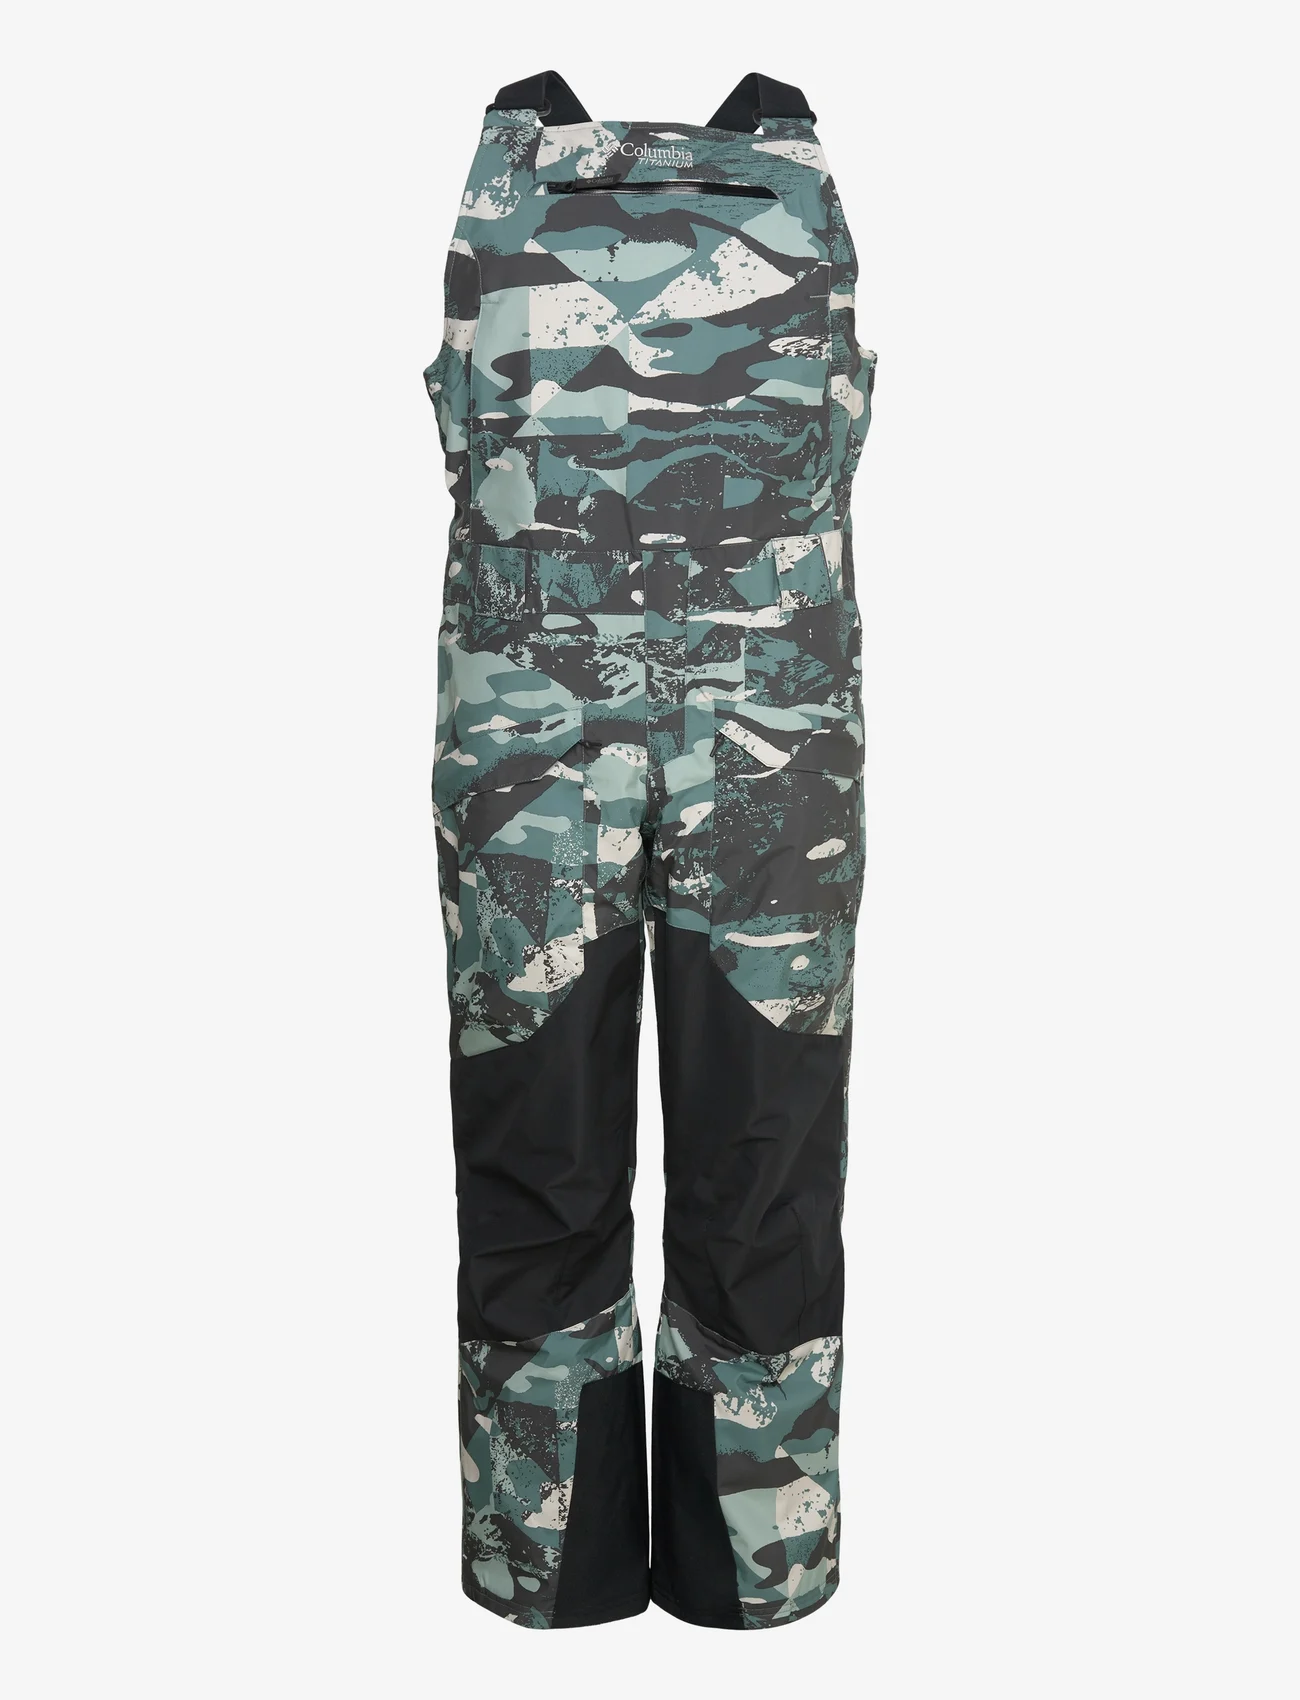 Columbia Sportswear - Highland Summit Bib - skiing pants - metal geoglacial print, black - 0